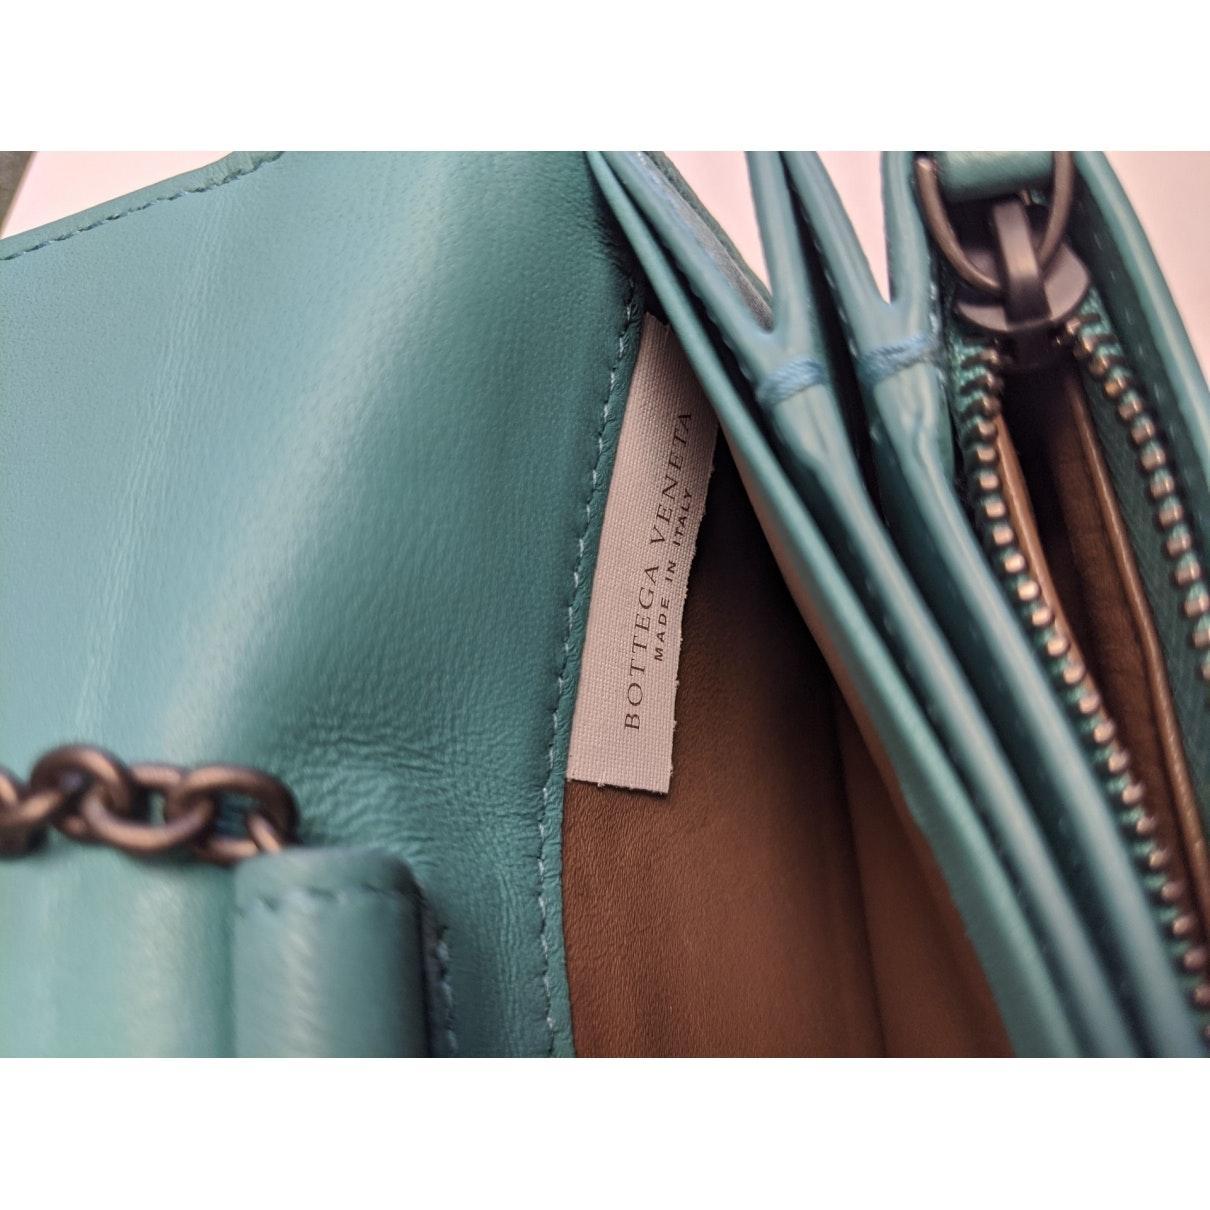 Bottega Veneta Leather Clutch Bag in Turquoise (Blue) - Lyst